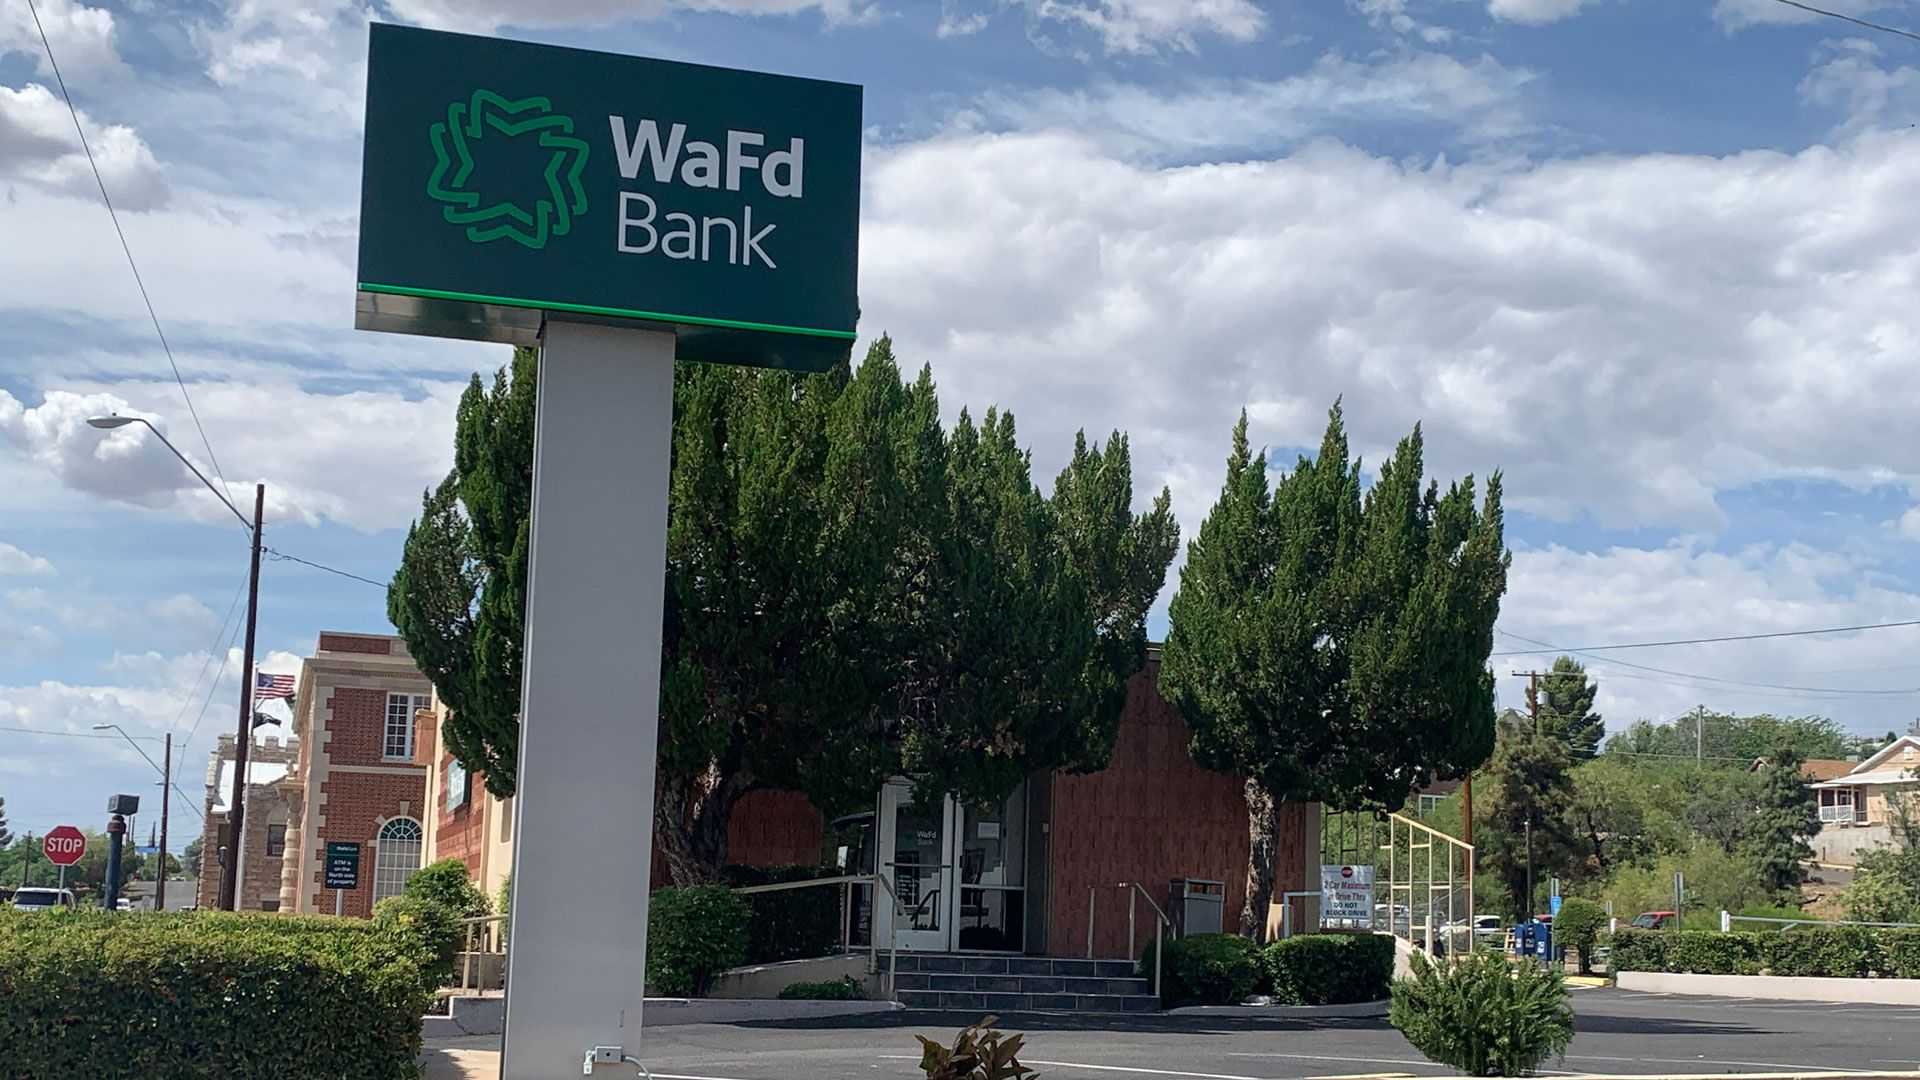 WaFd Bank in Globe, Arizona #1209 - Washington Federal.